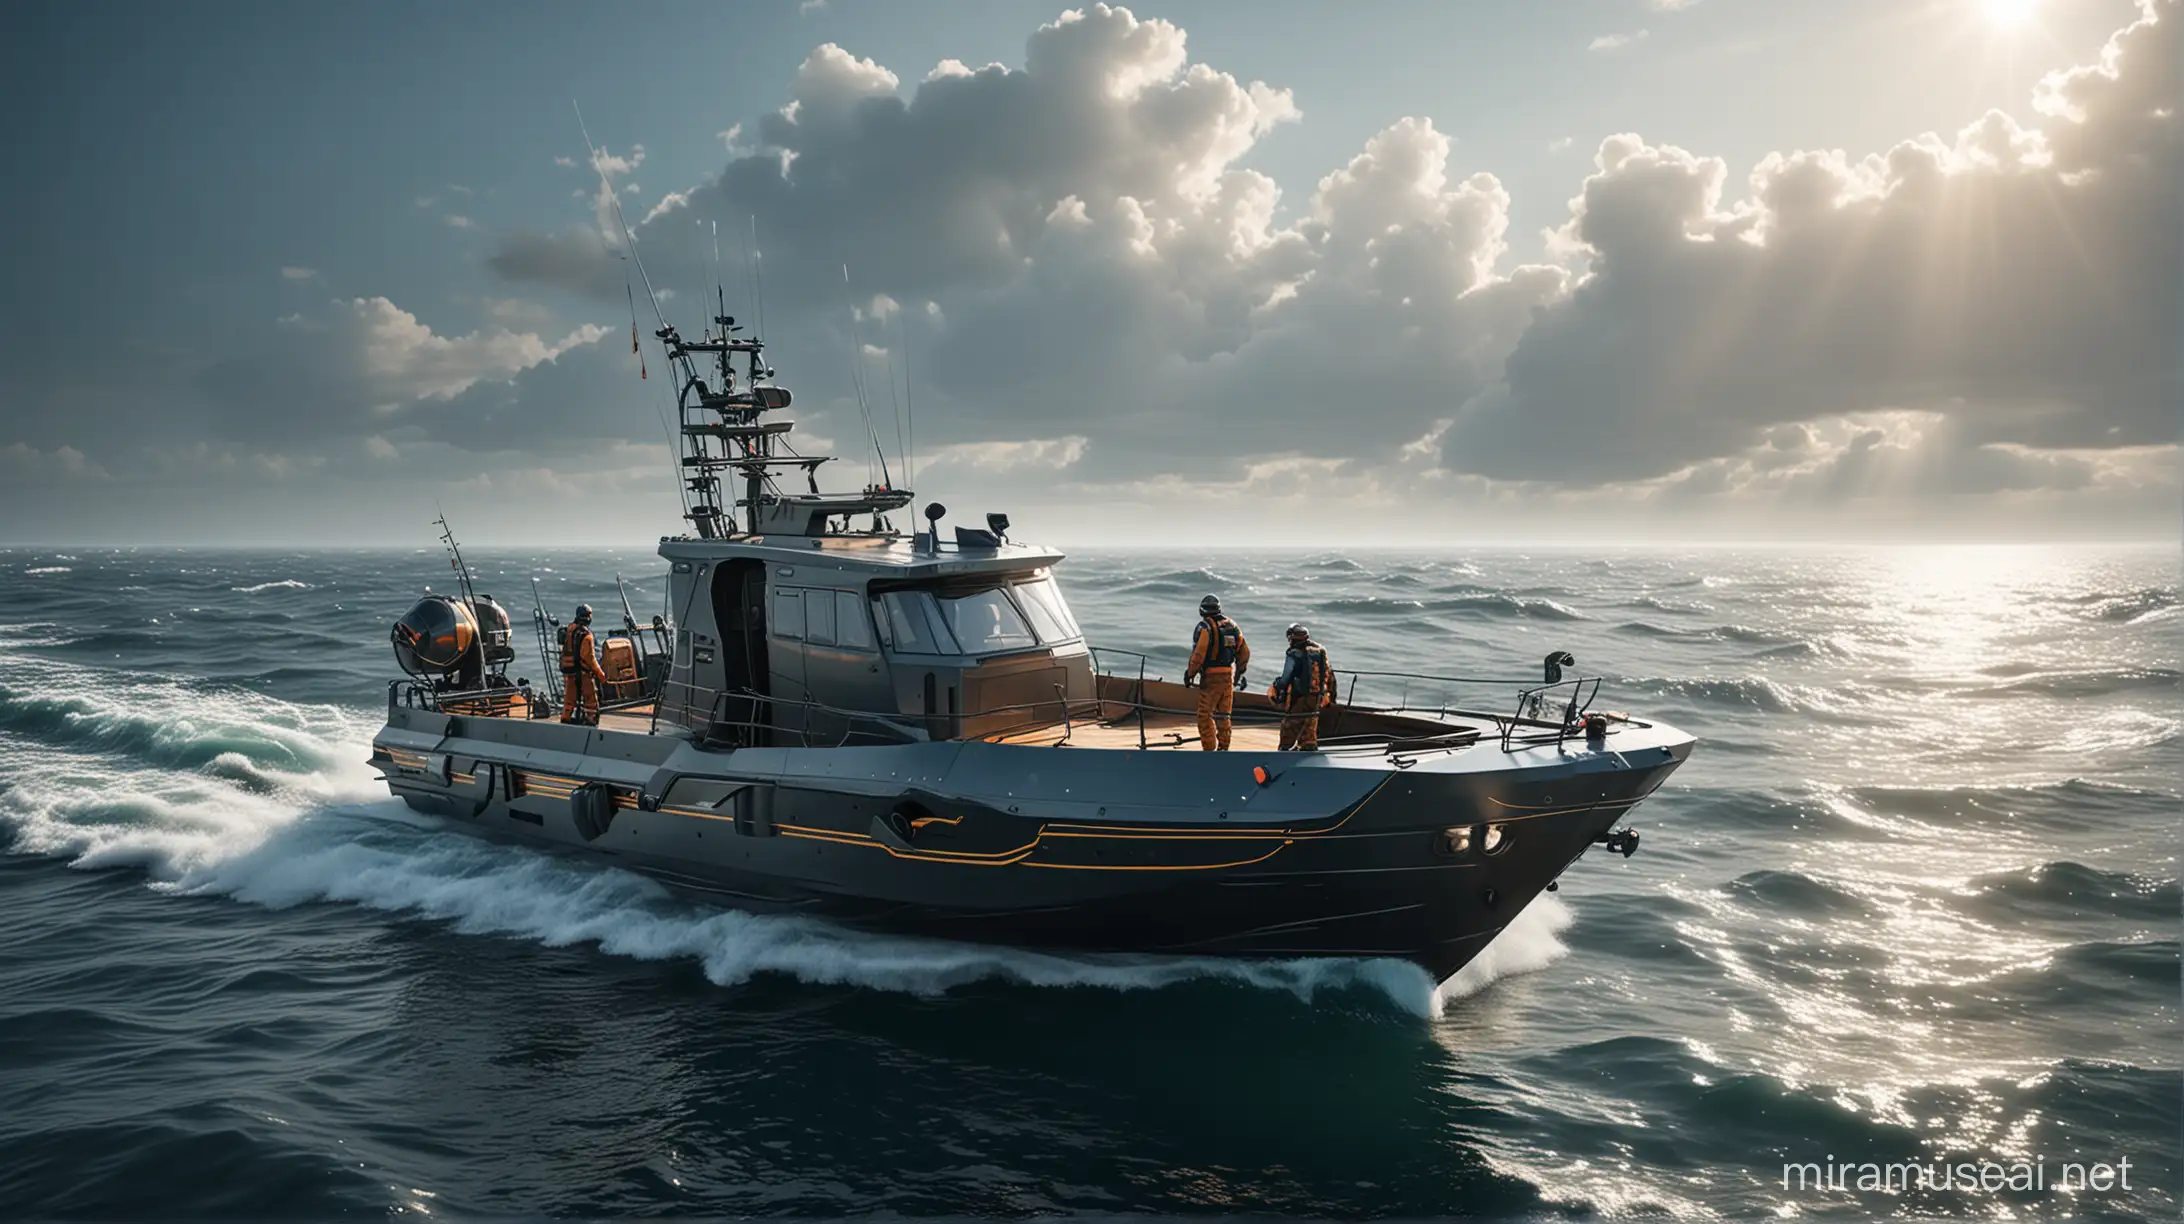 premium futuristic fisherman boat with equipment details and rendering in sea scene